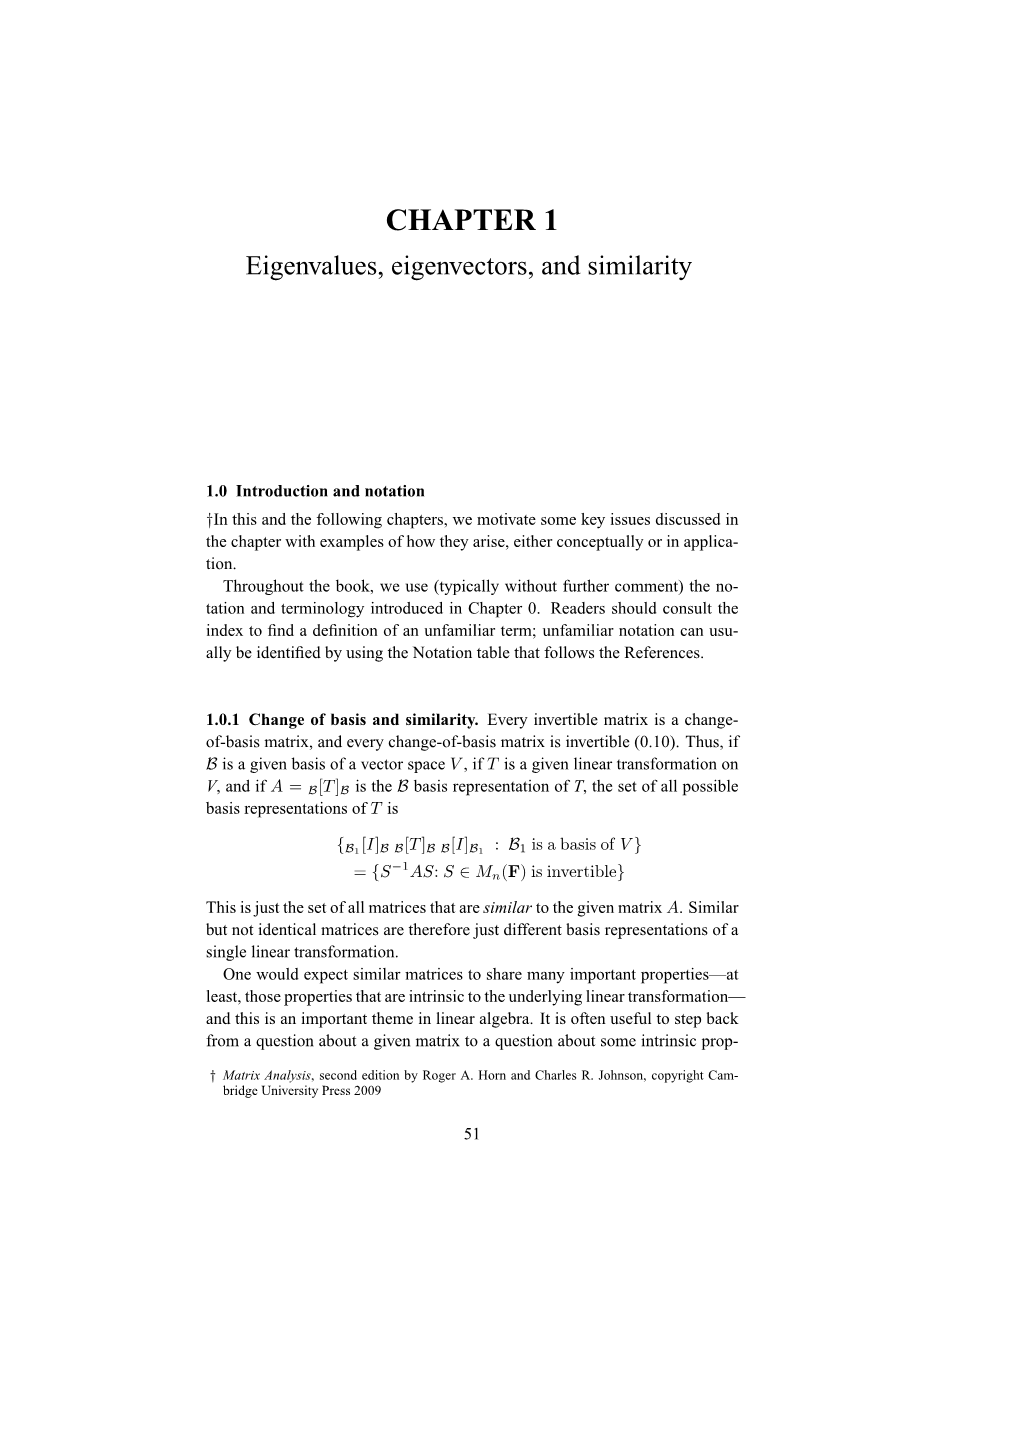 CHAPTER 1 Eigenvalues, Eigenvectors, and Similarity